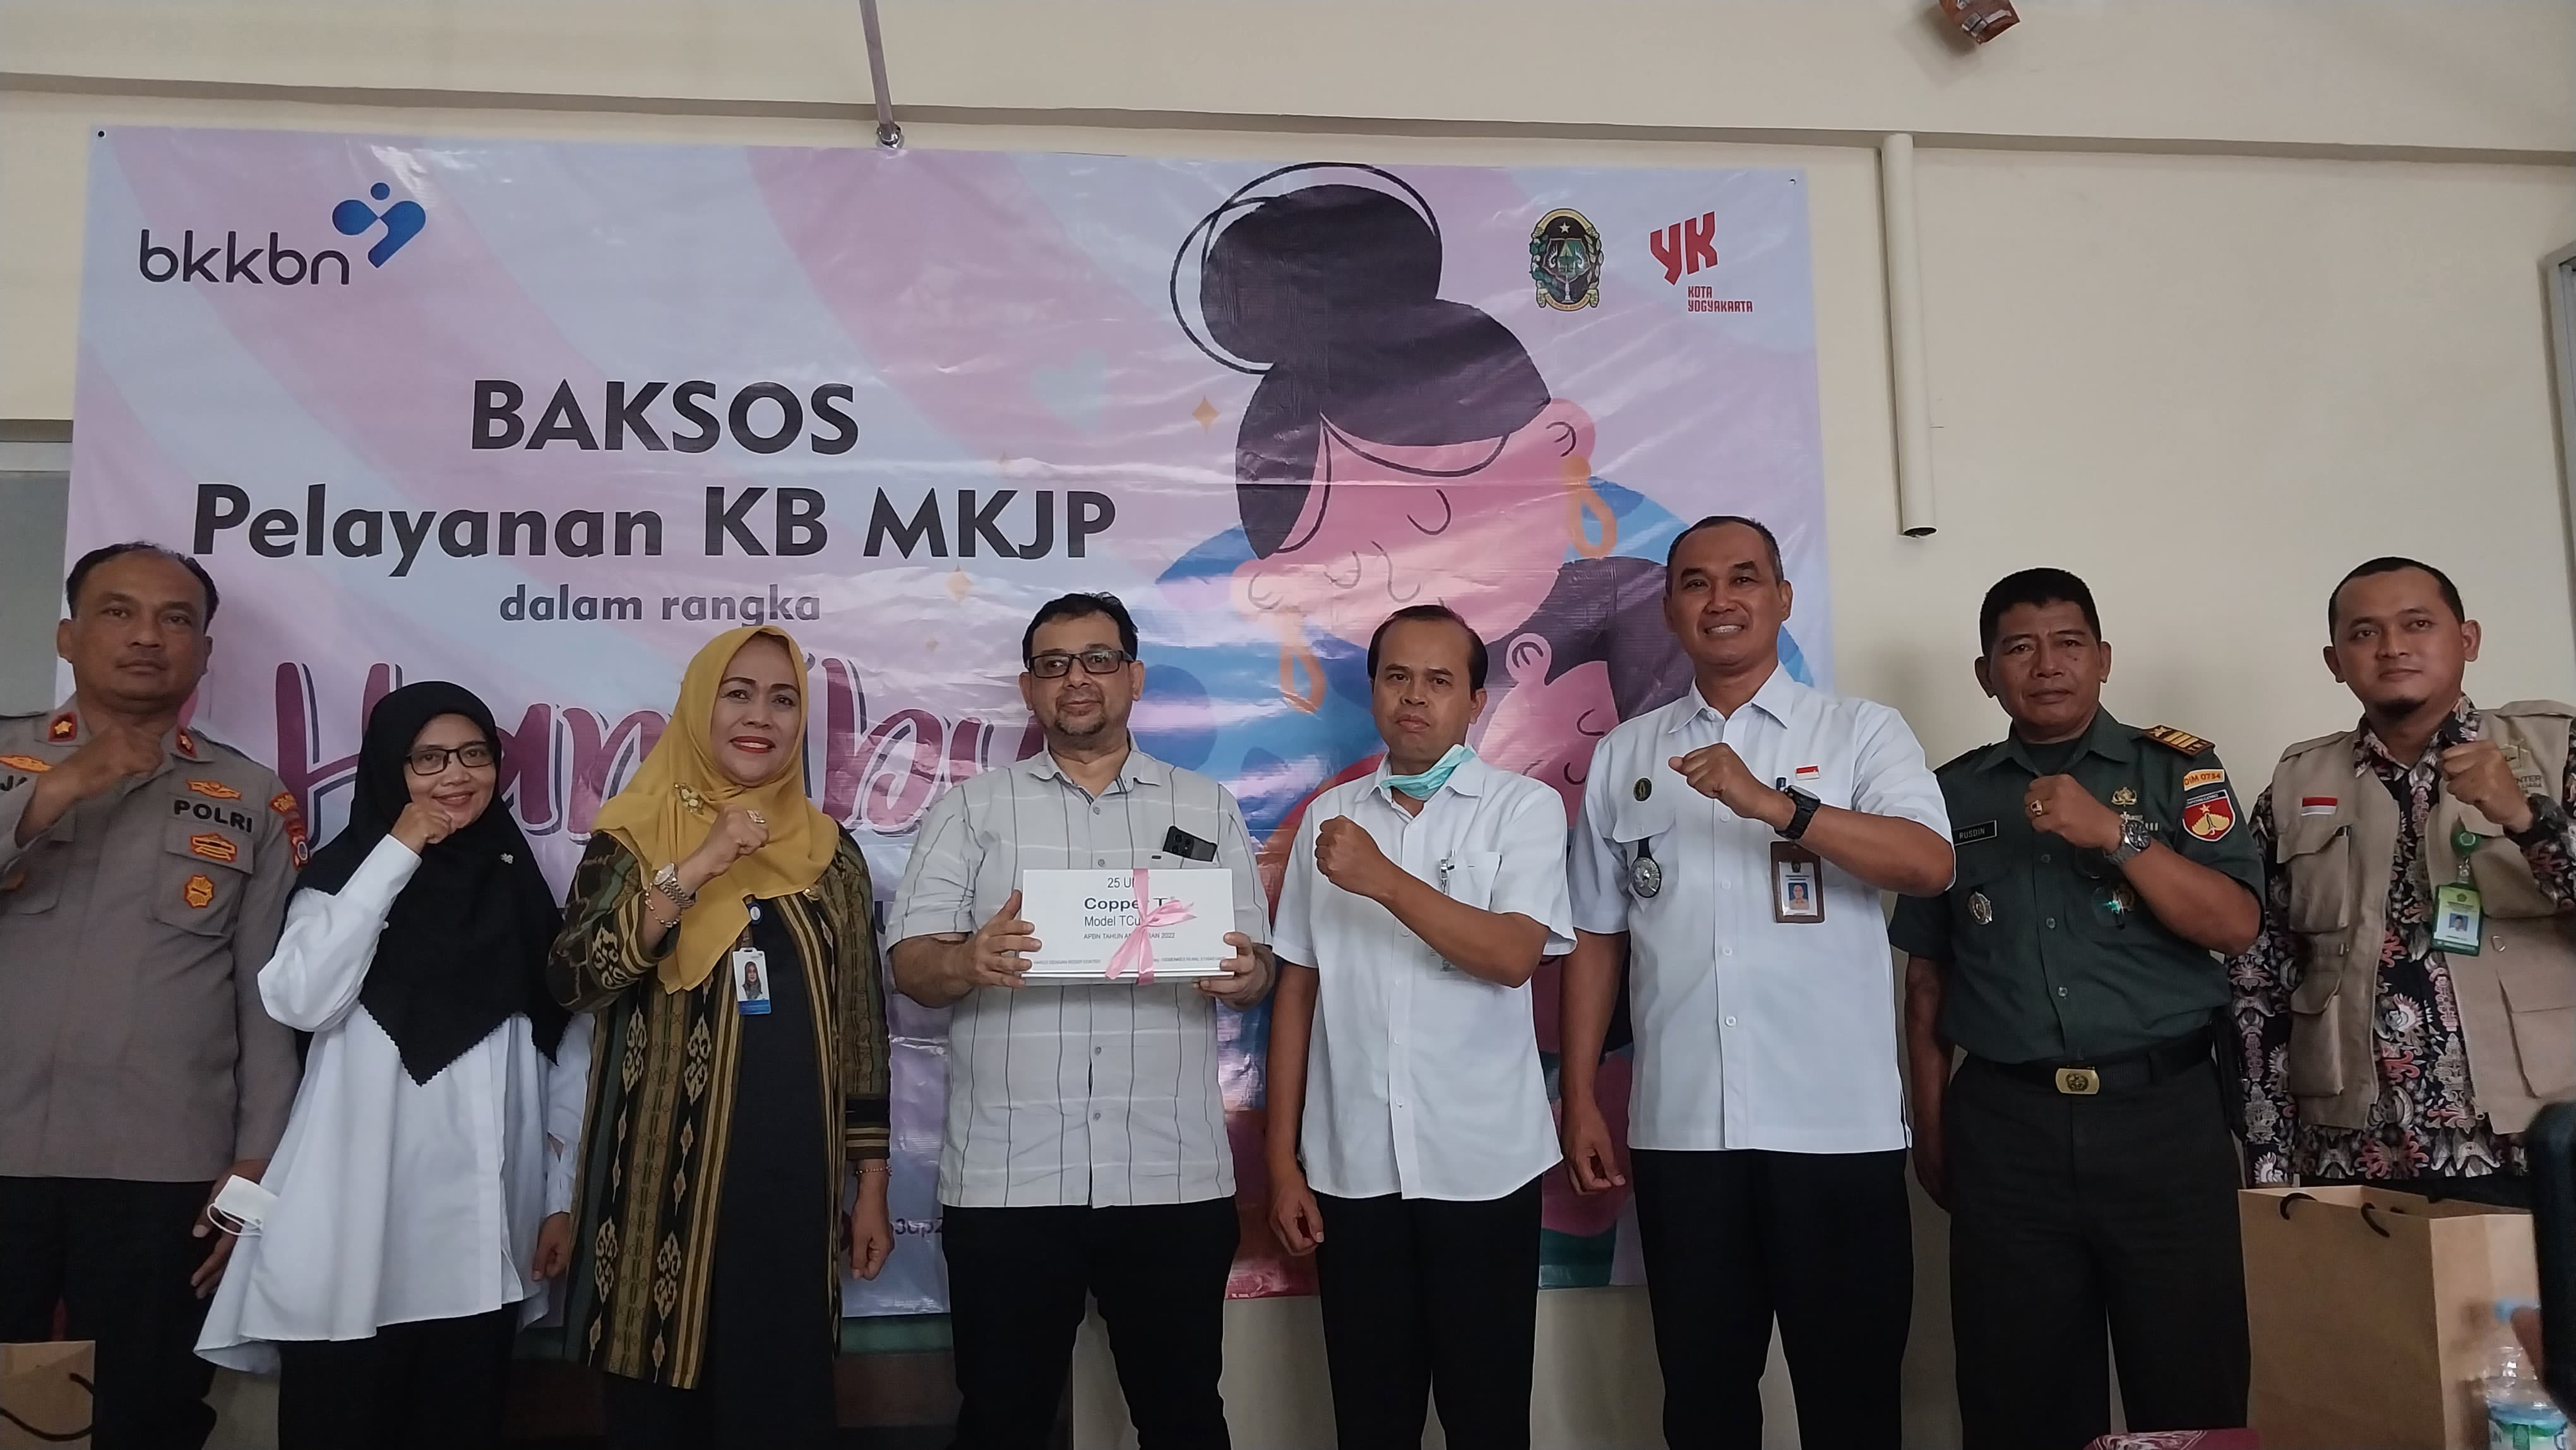 Bakti Sosial Pelayanan KB MKJP di Klinik Utama Fajar Yogyakarta